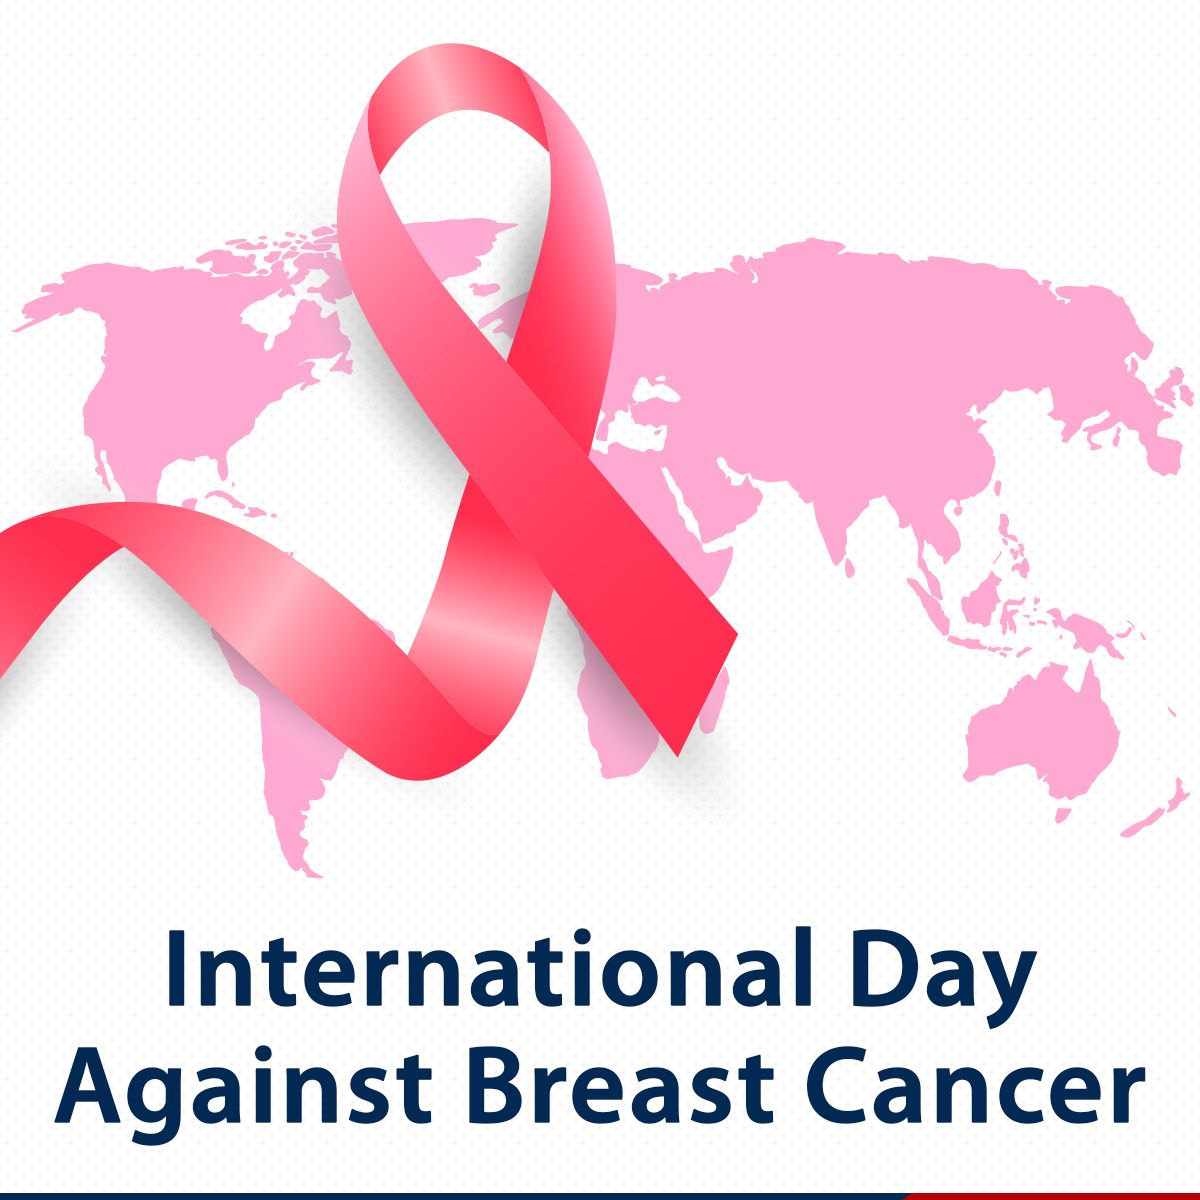 International Day Against Breast Cancer